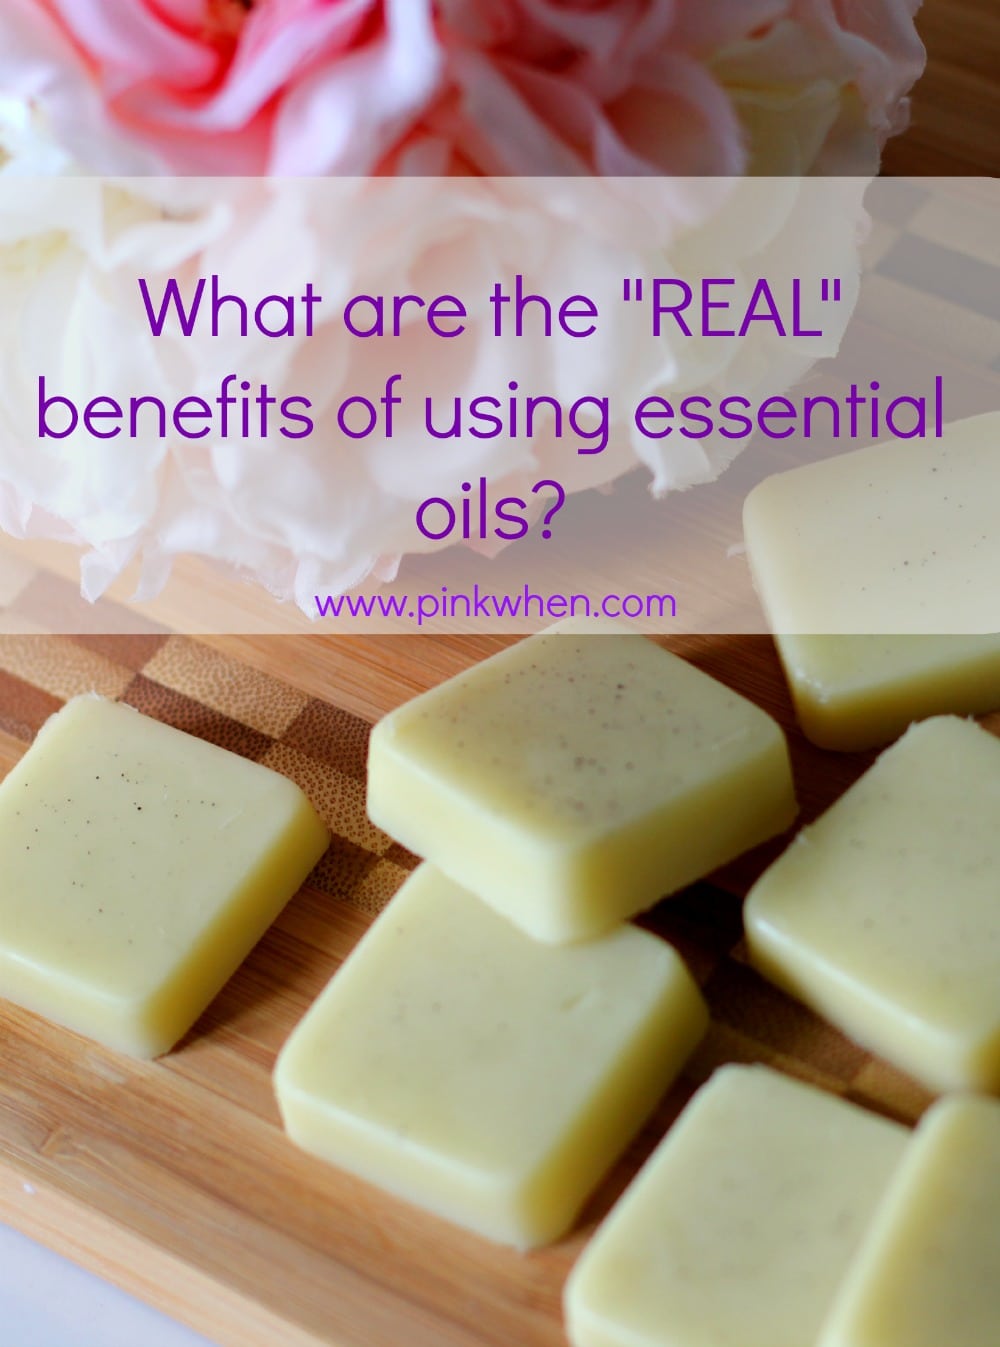 Benefits of Using Essential Oils